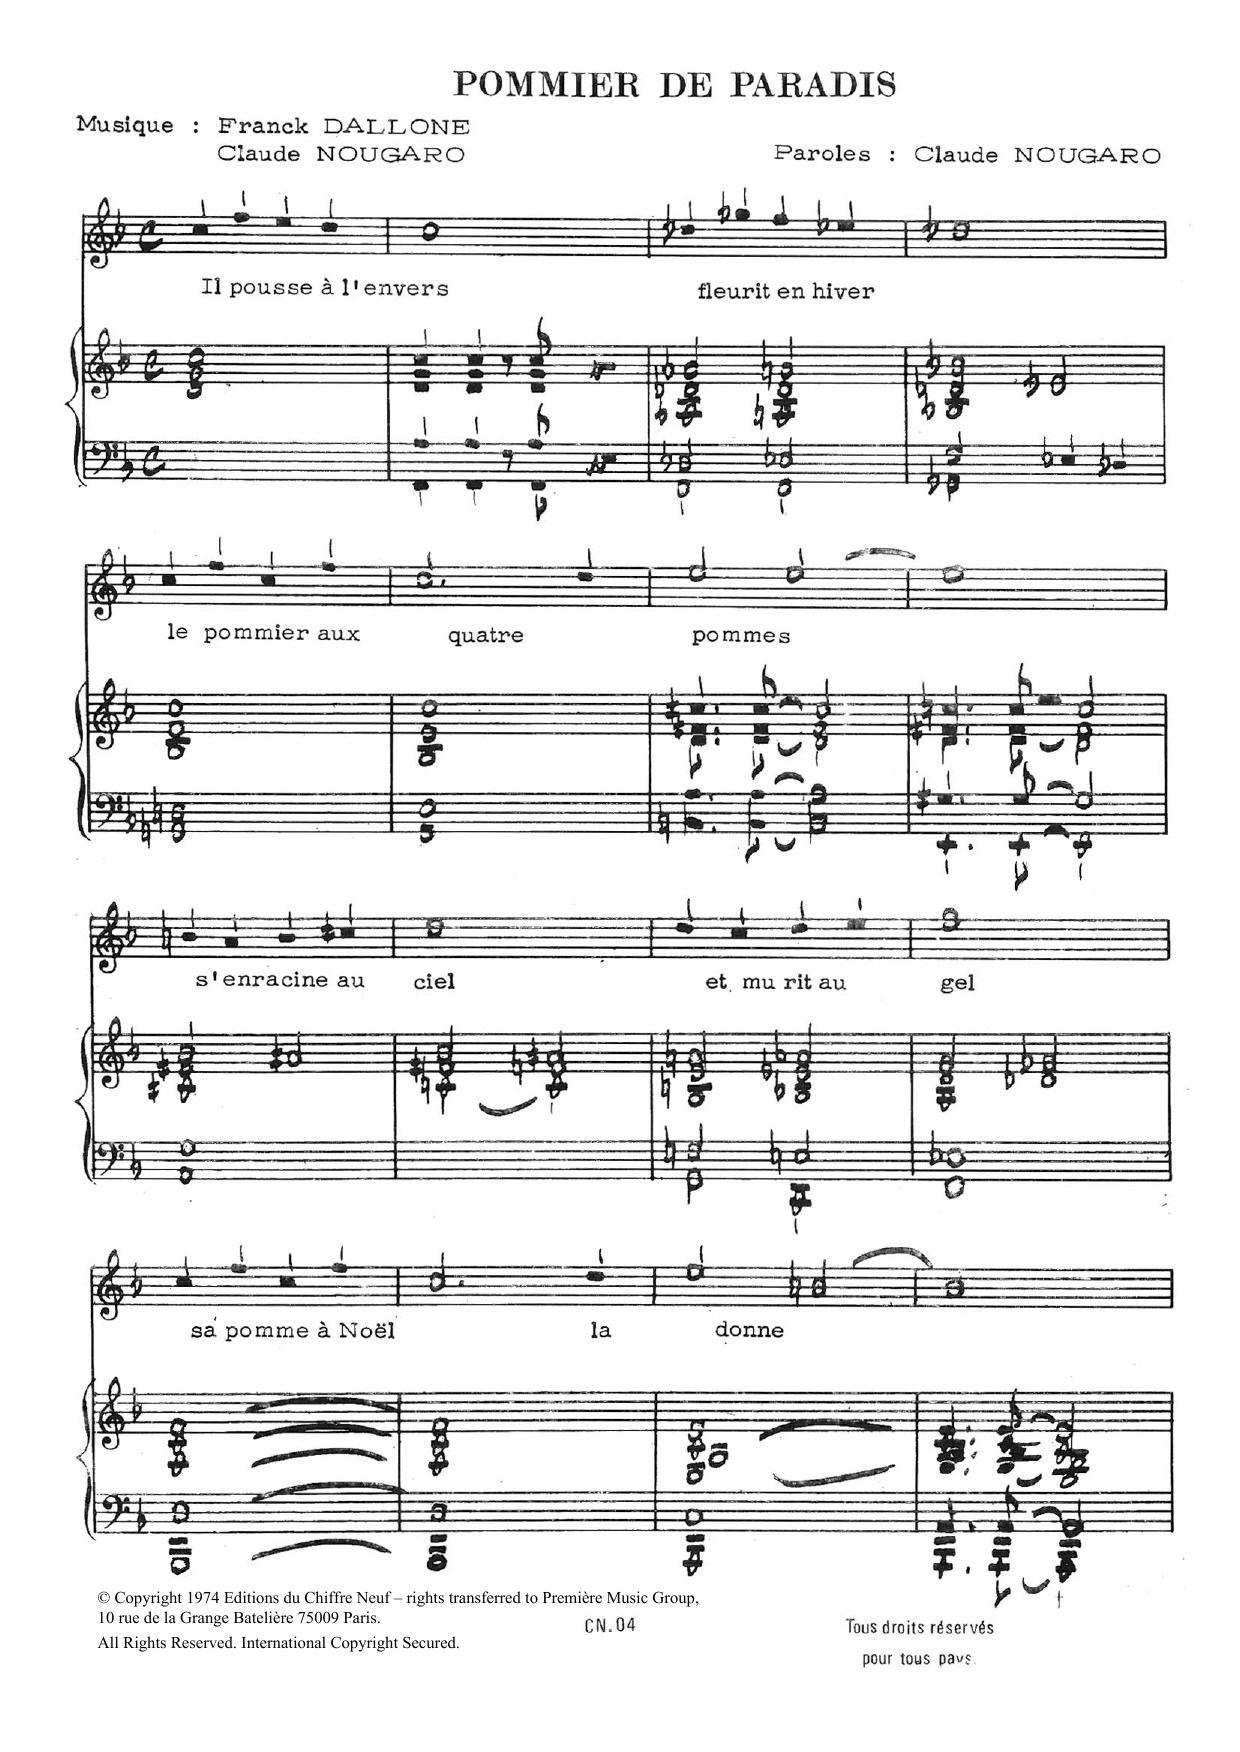 Claude Nougaro Pommier De Paradis Sheet Music Notes & Chords for Piano & Vocal - Download or Print PDF